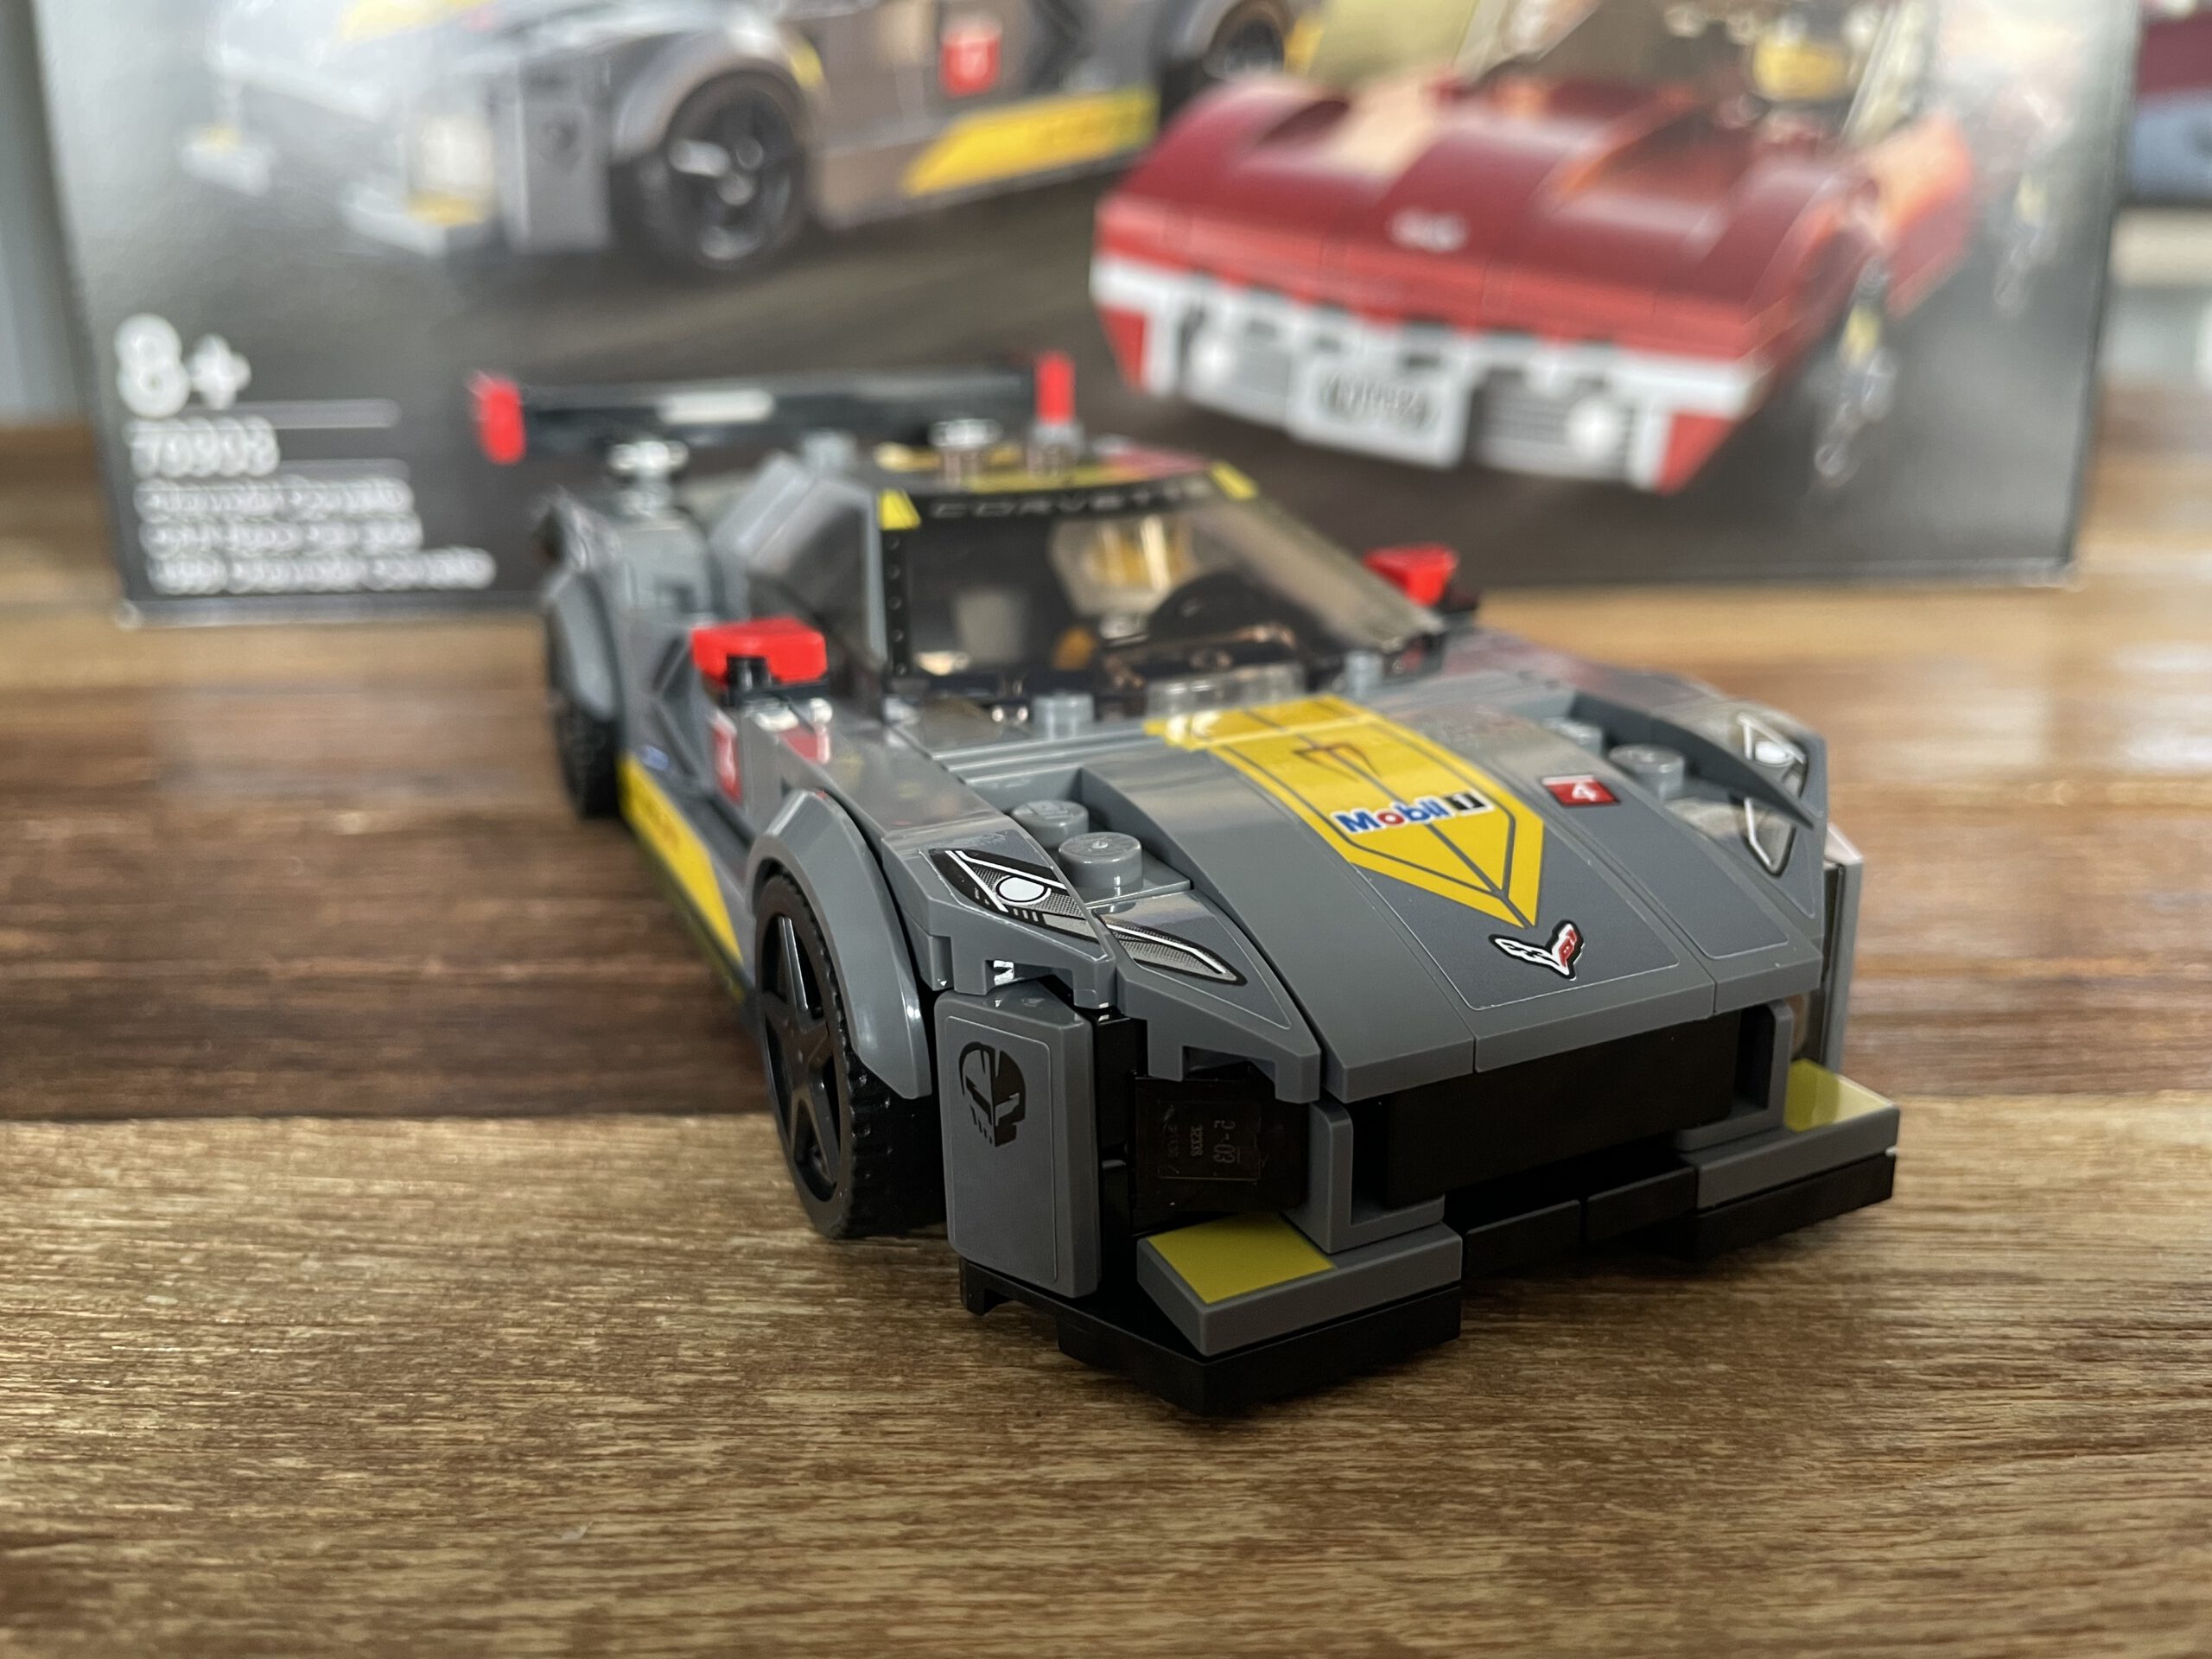 LEGO 76903 Chevrolet Corvette Speed Champions